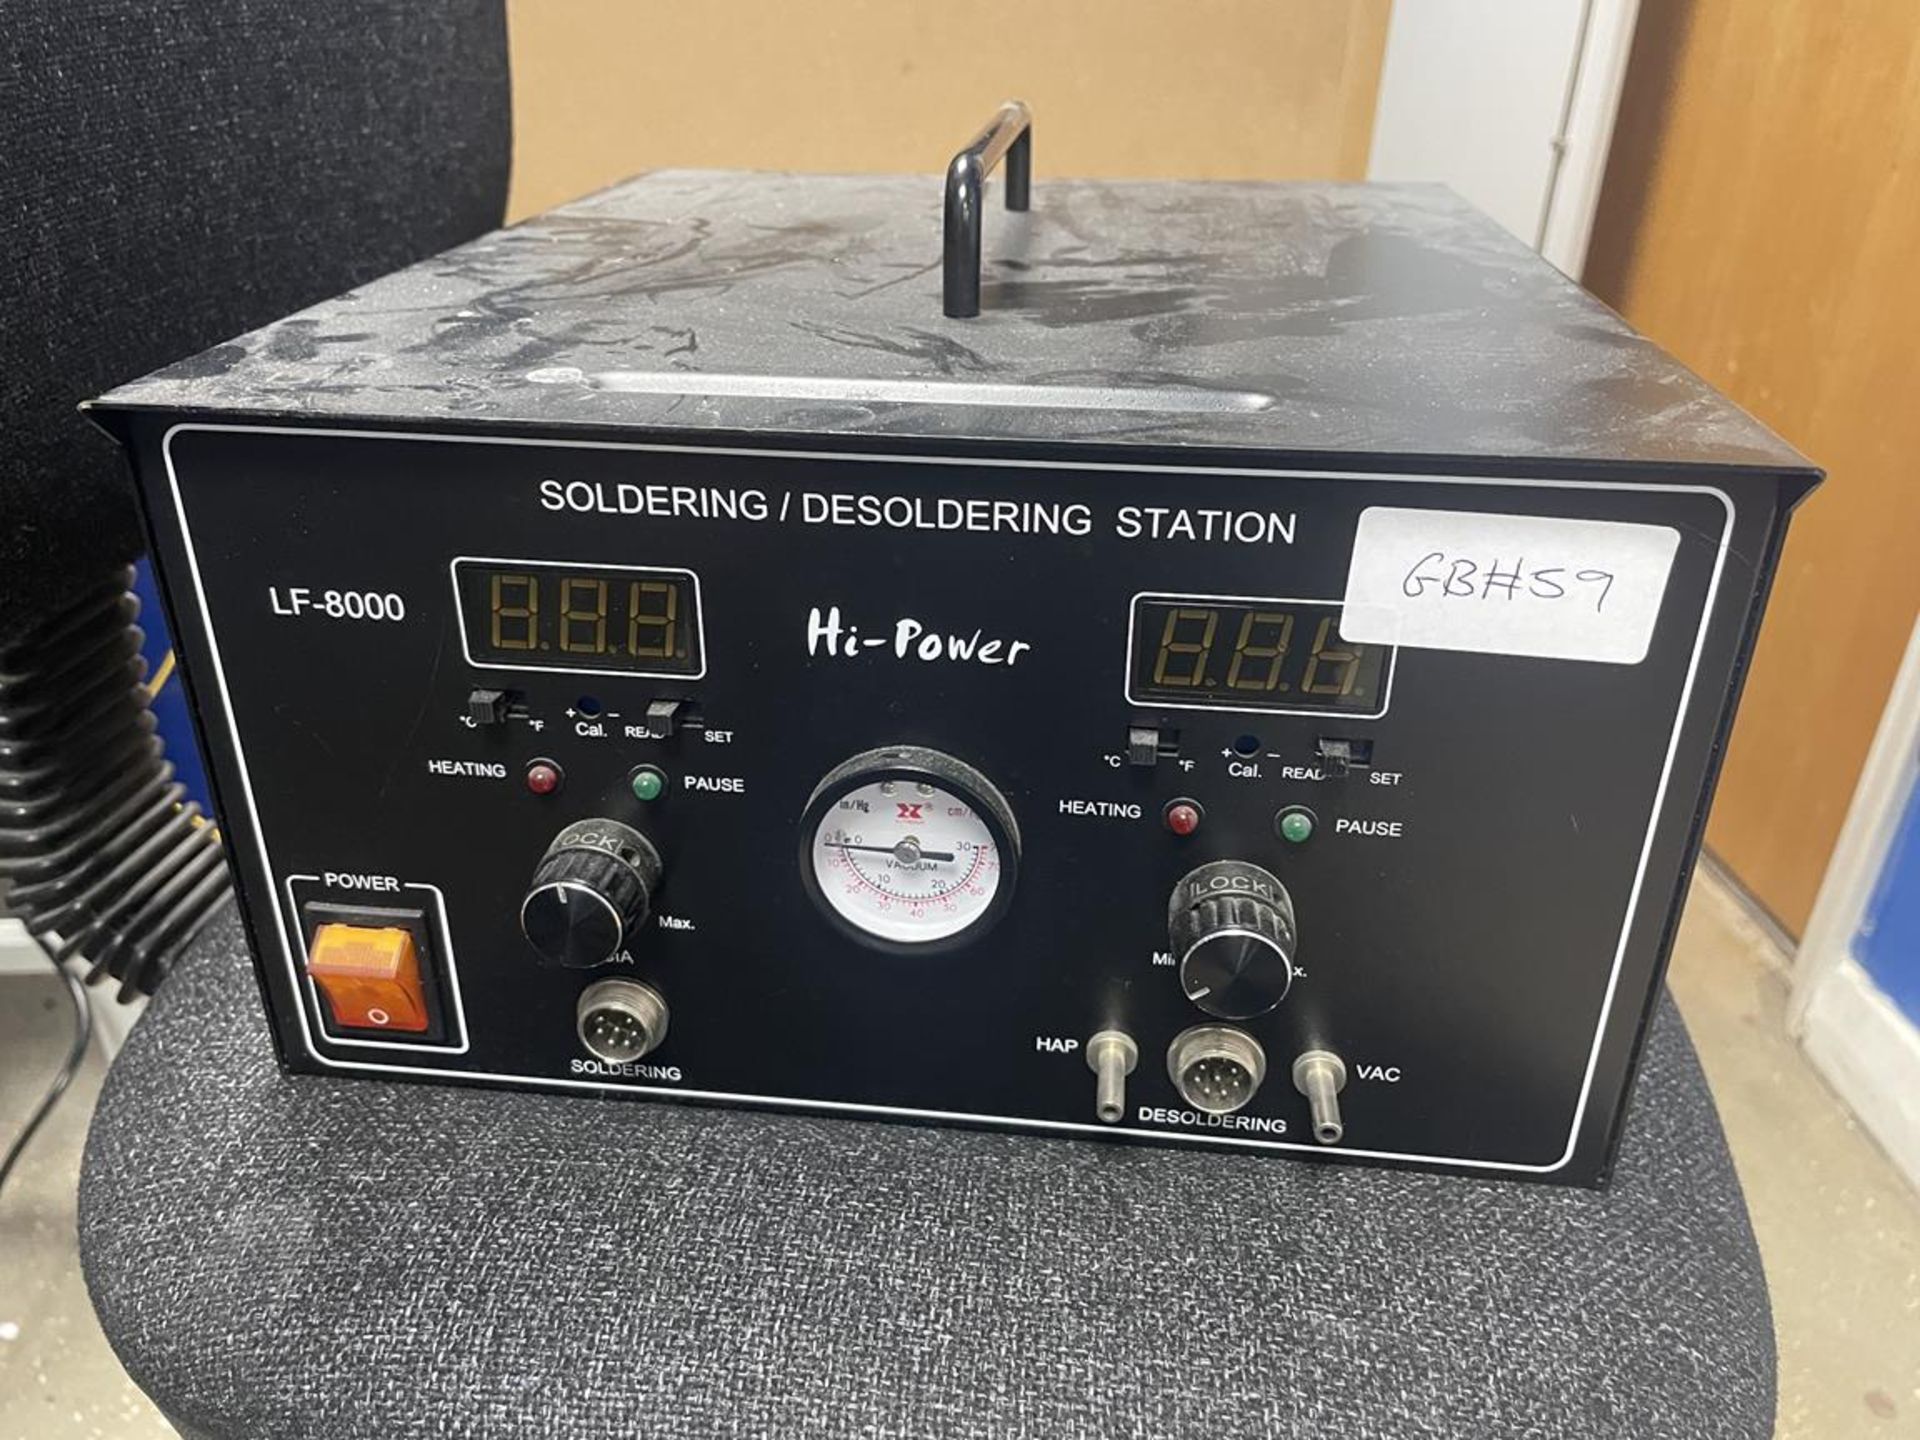 LF-8000 Temperature Controlled Soldering/Desoldering Station S/No. 8070506 (GB REF#59)